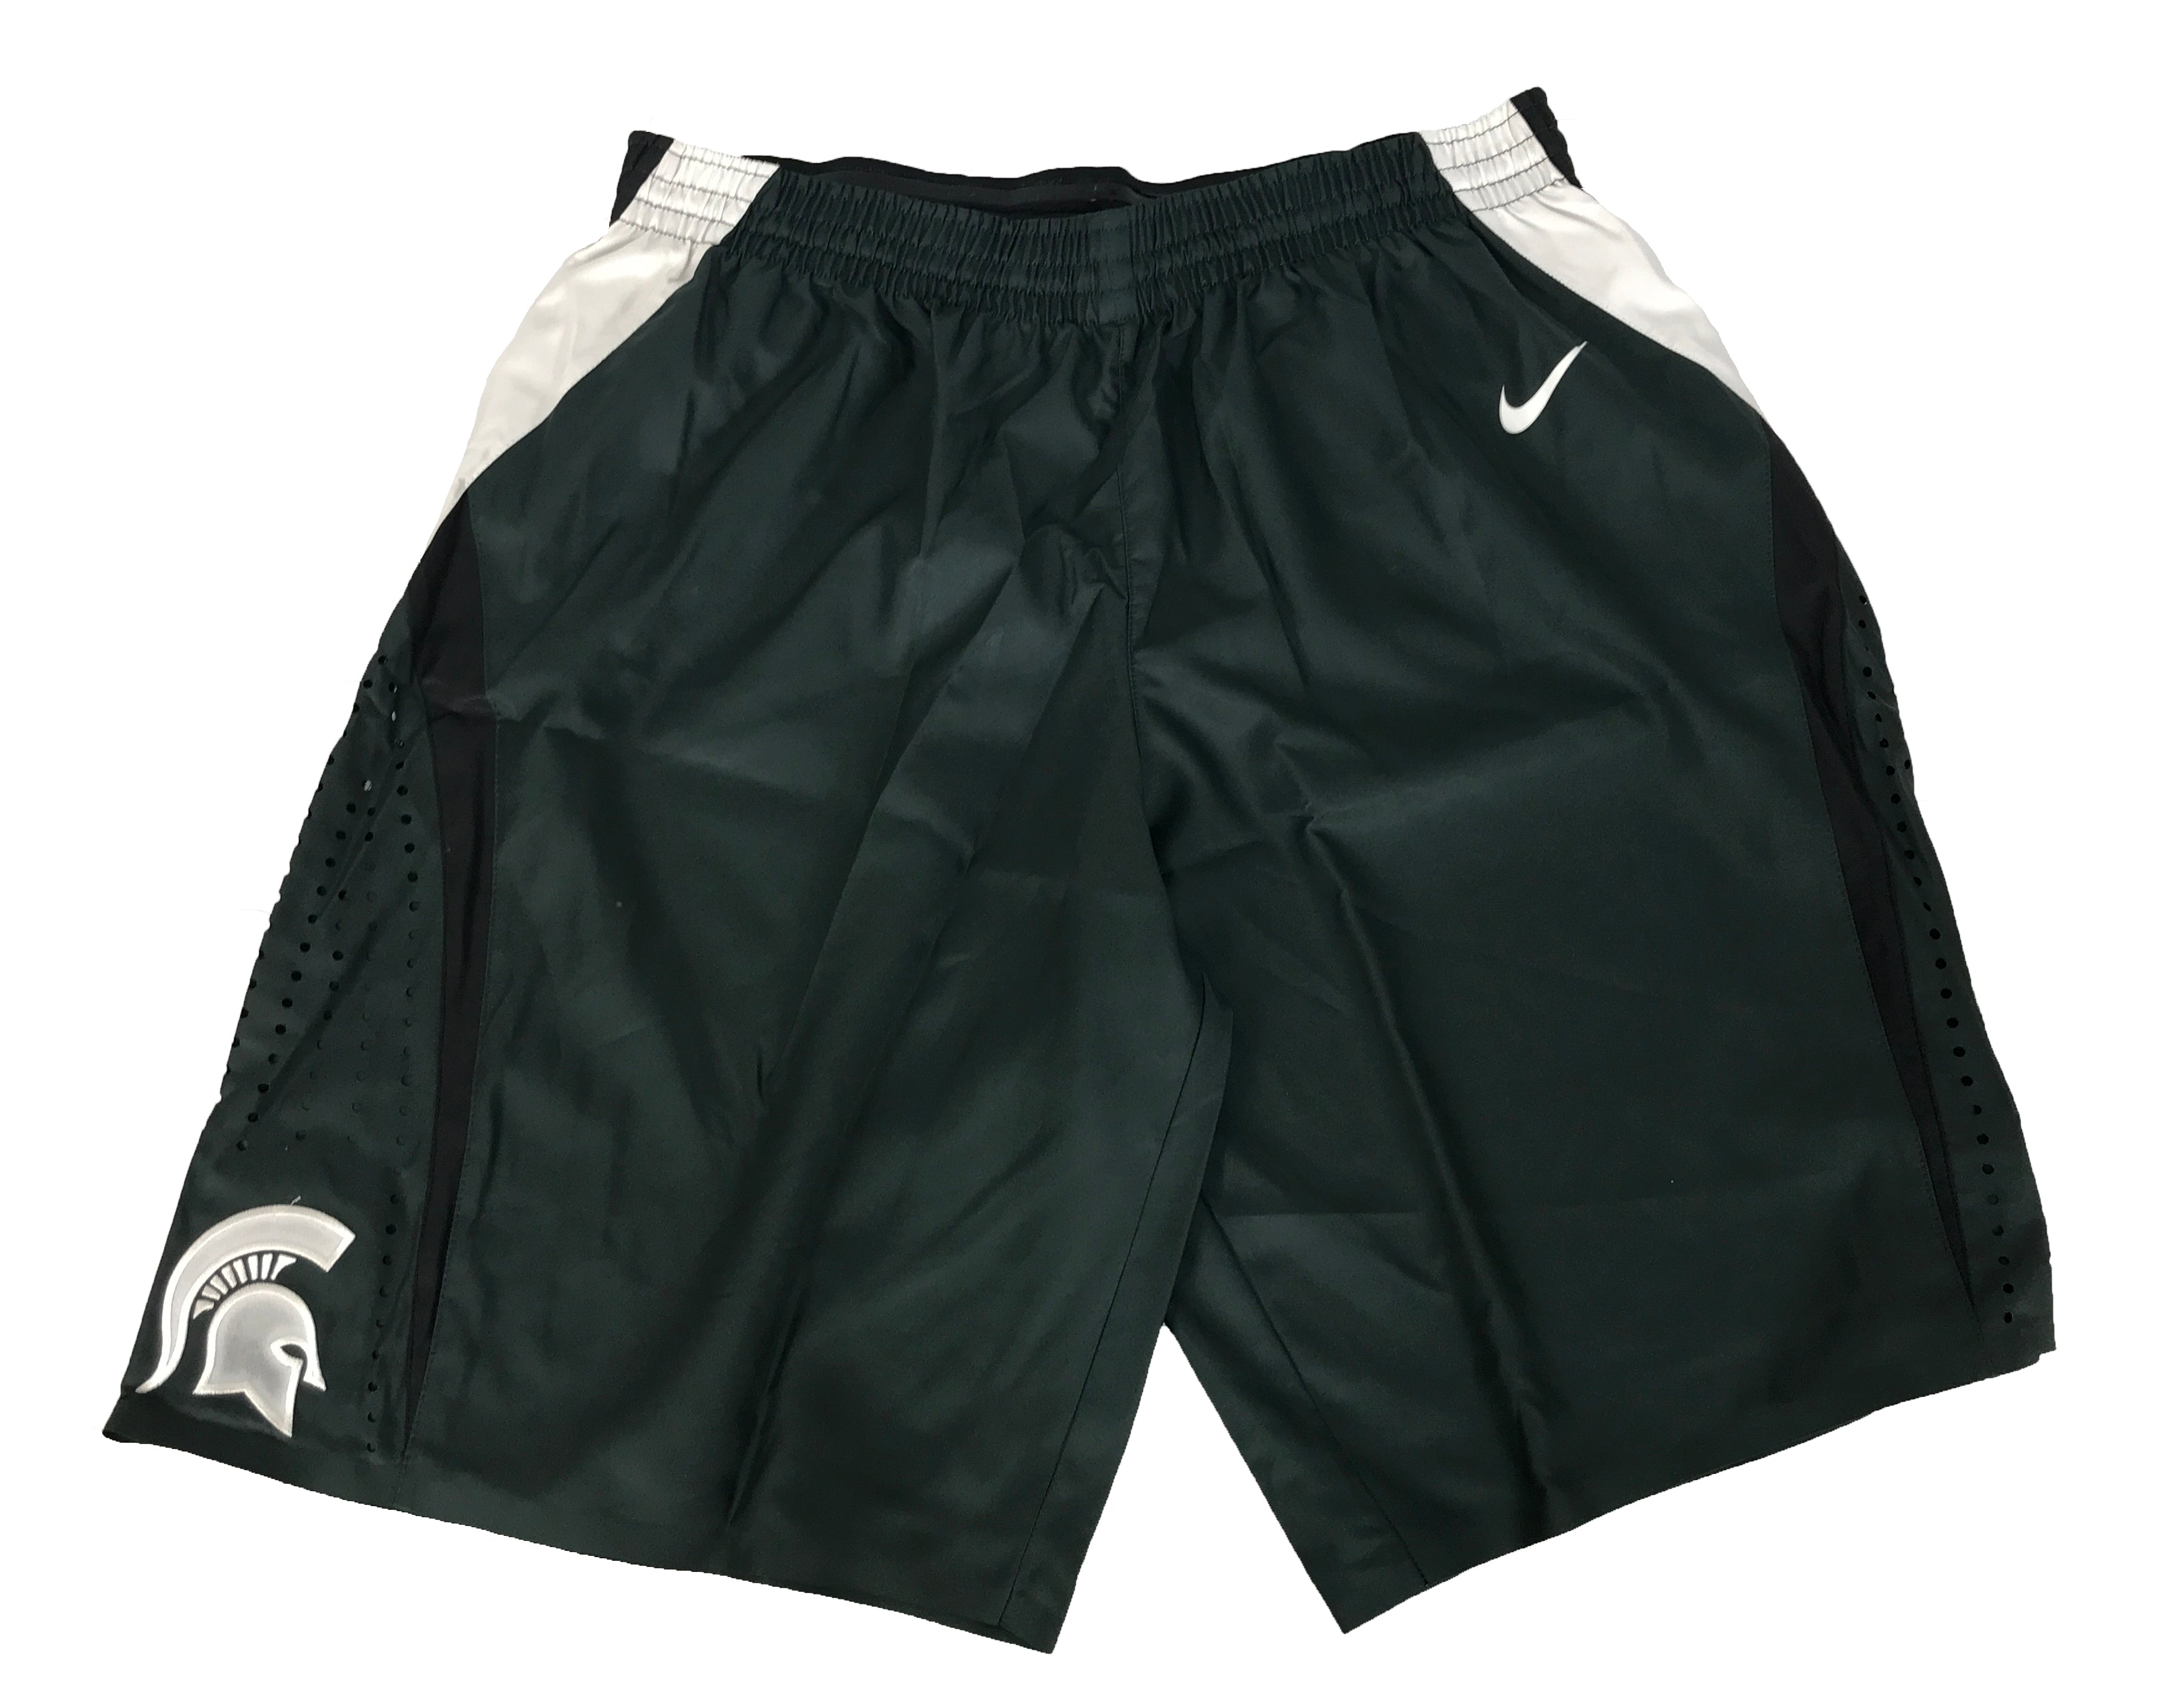 Nike Michigan State University Green Basketball Shorts Men's Size M